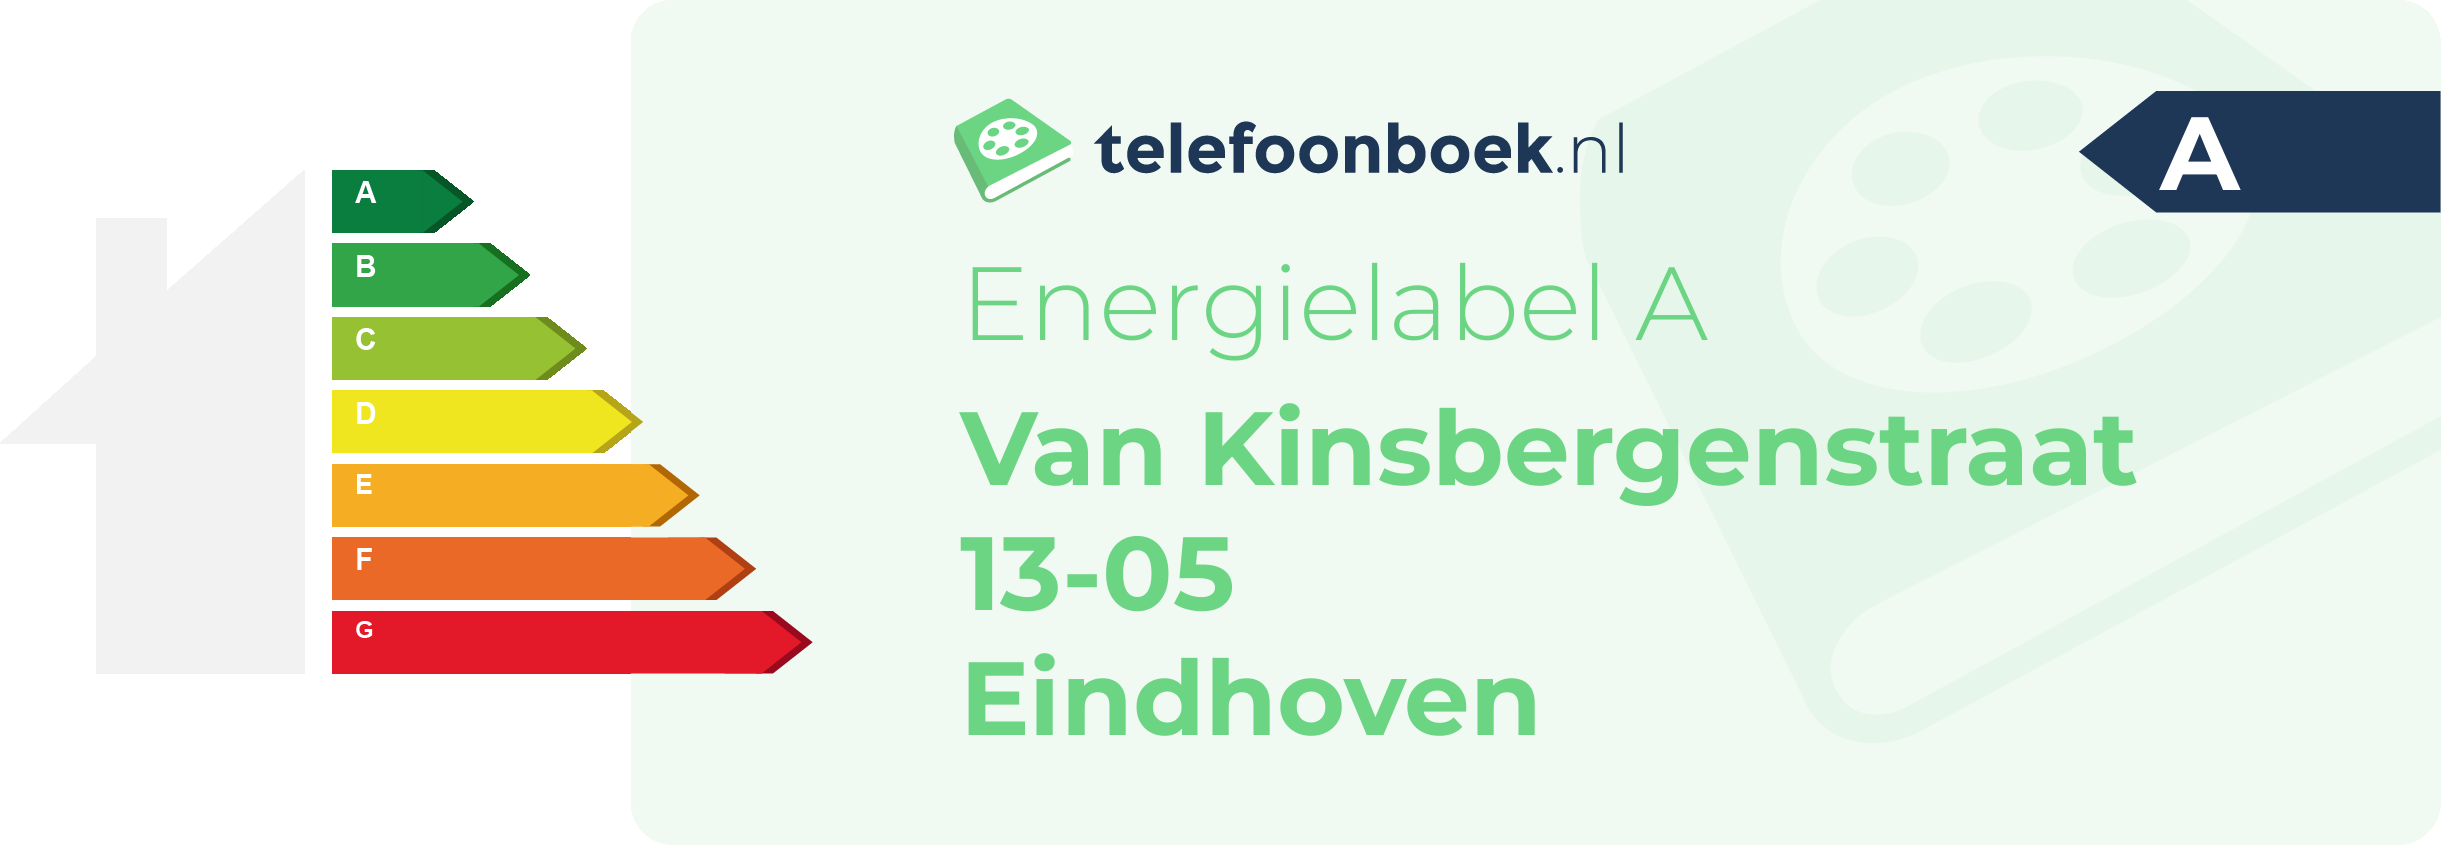 Energielabel Van Kinsbergenstraat 13-05 Eindhoven